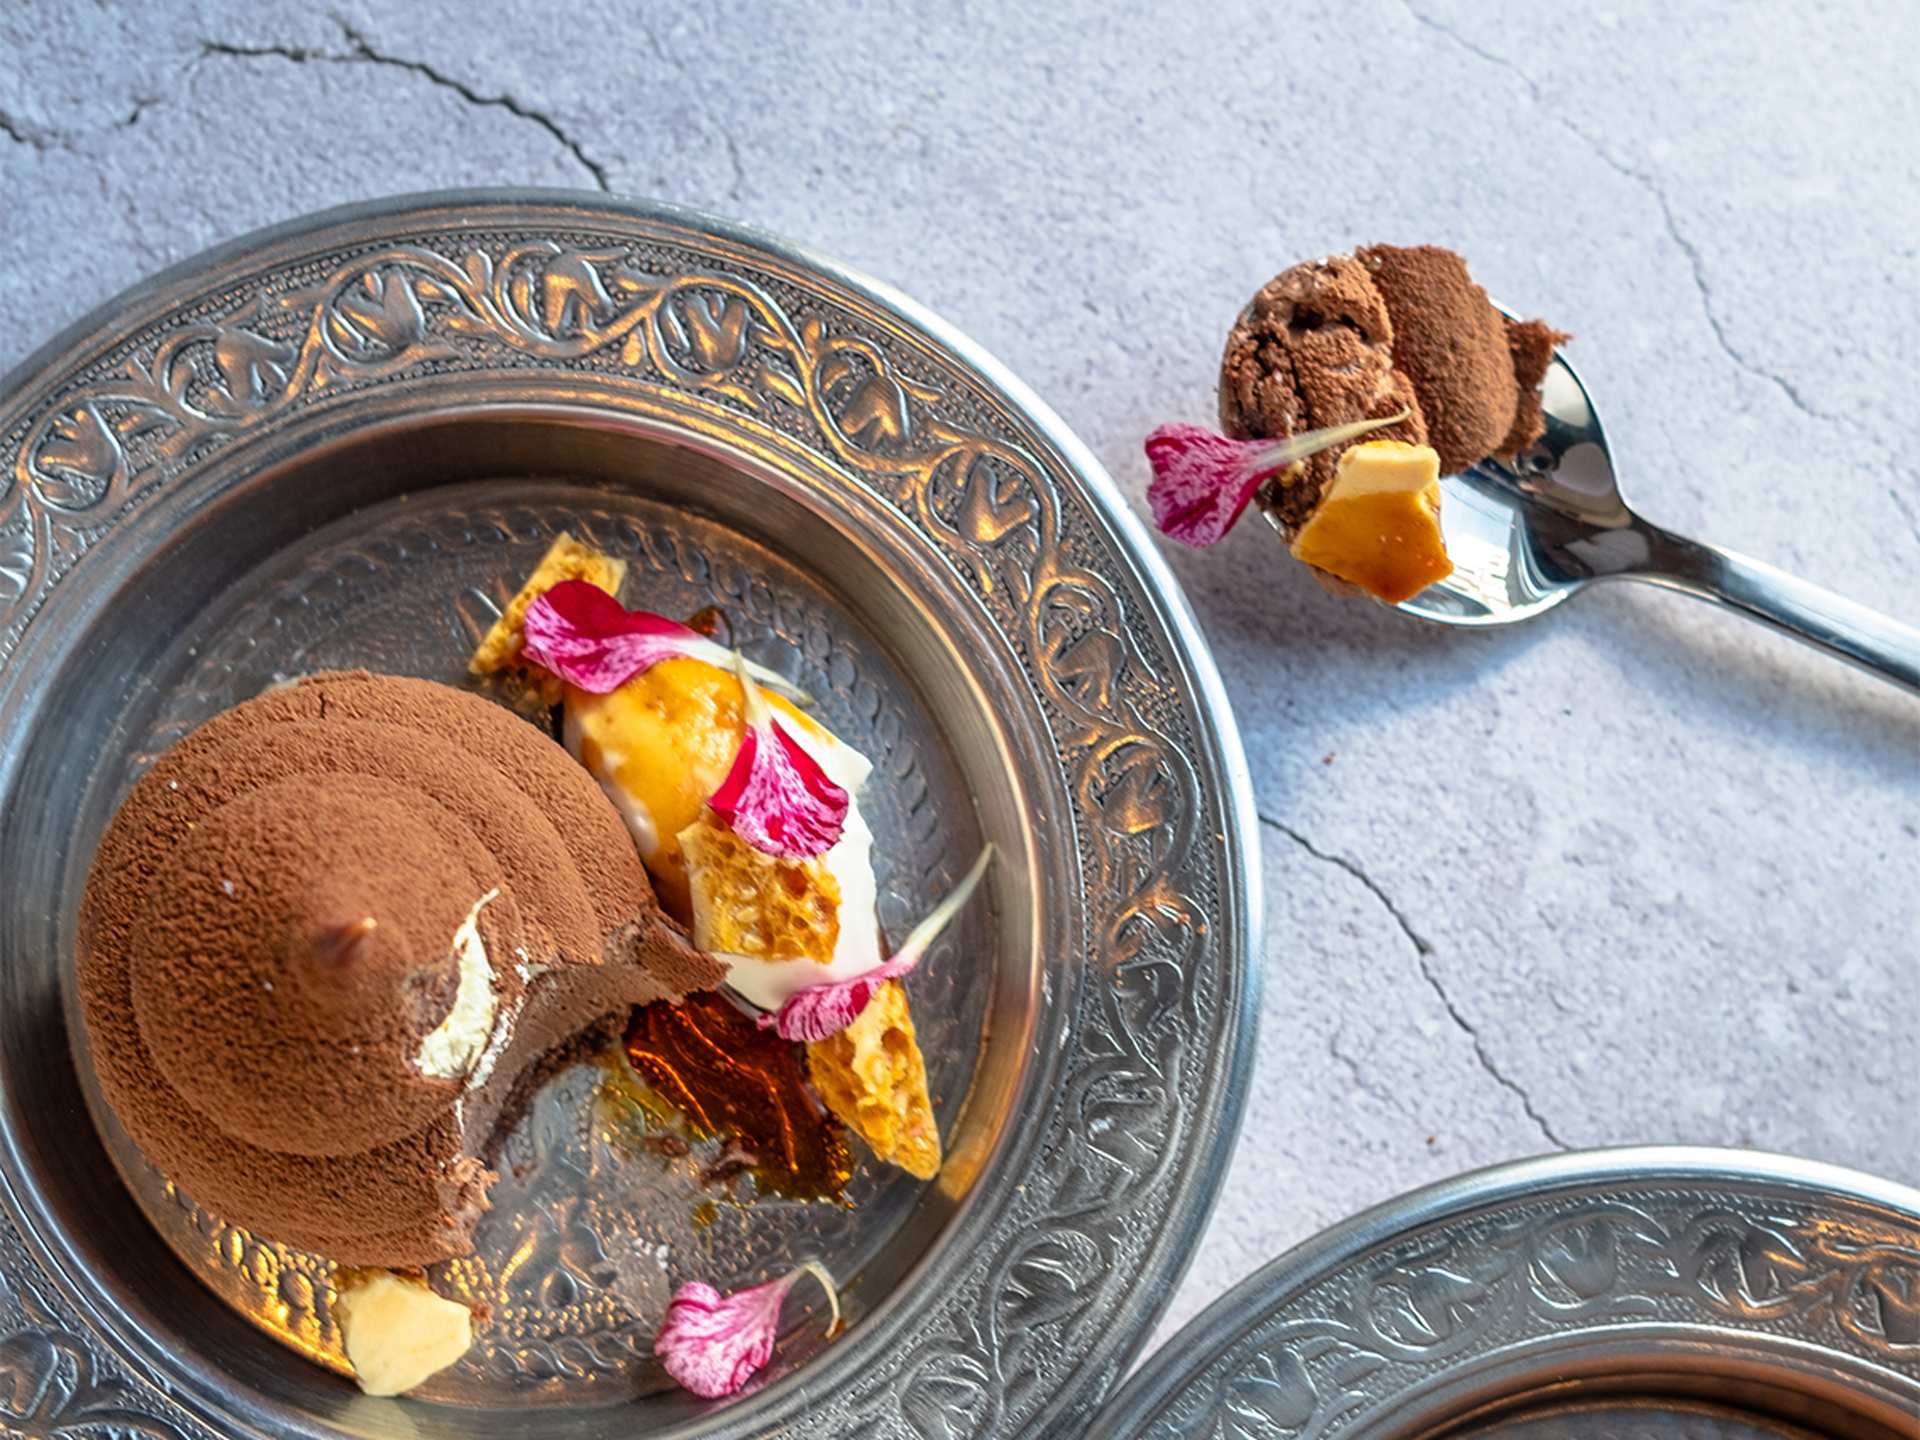 Best restaurants on Ossington | Chocolate dessert at Azhar kitchen and bar